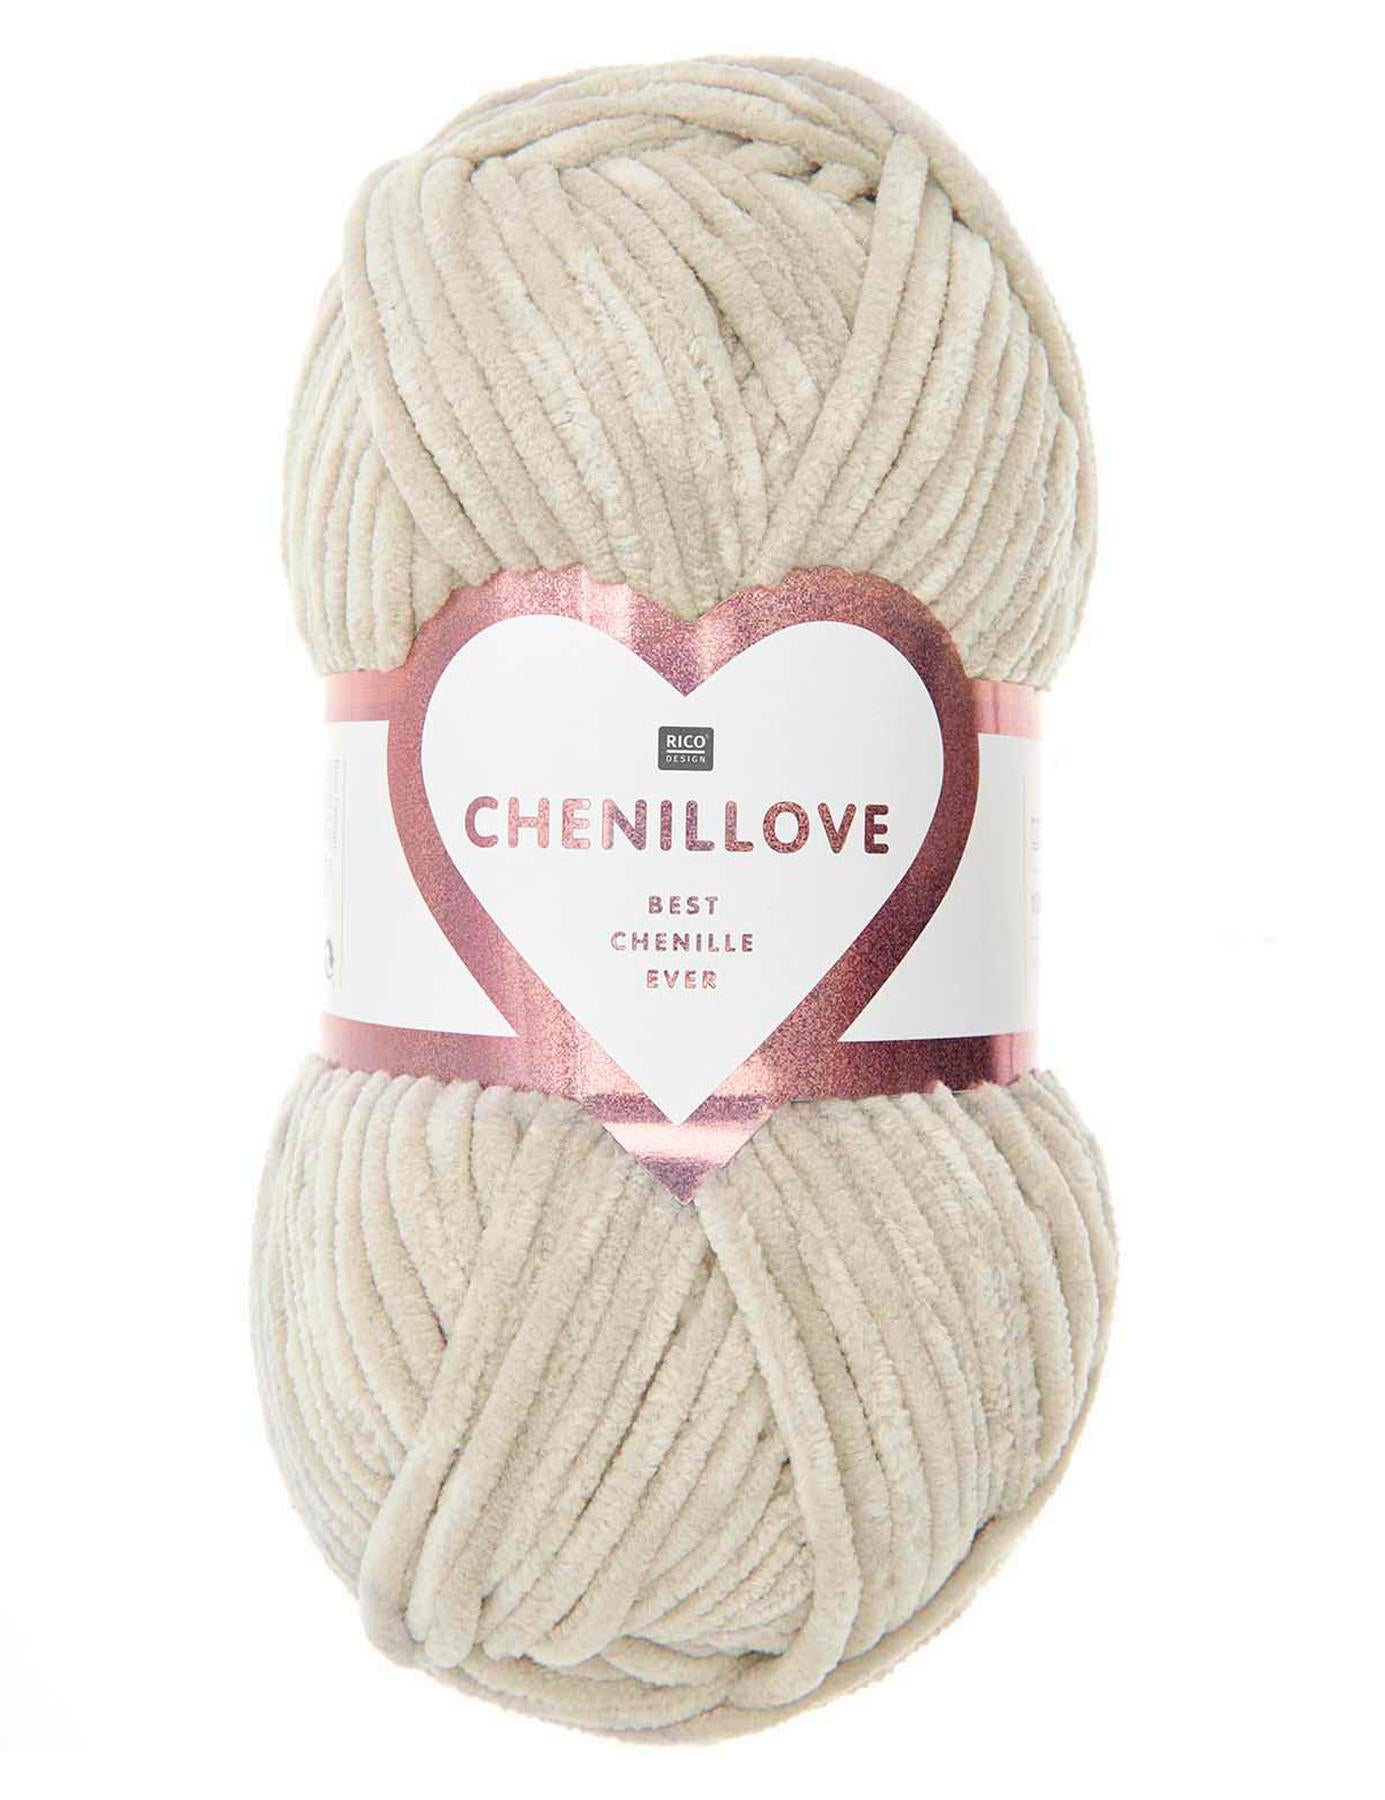 RICO Chenillove Ecru (002) chenille yarn - 100g